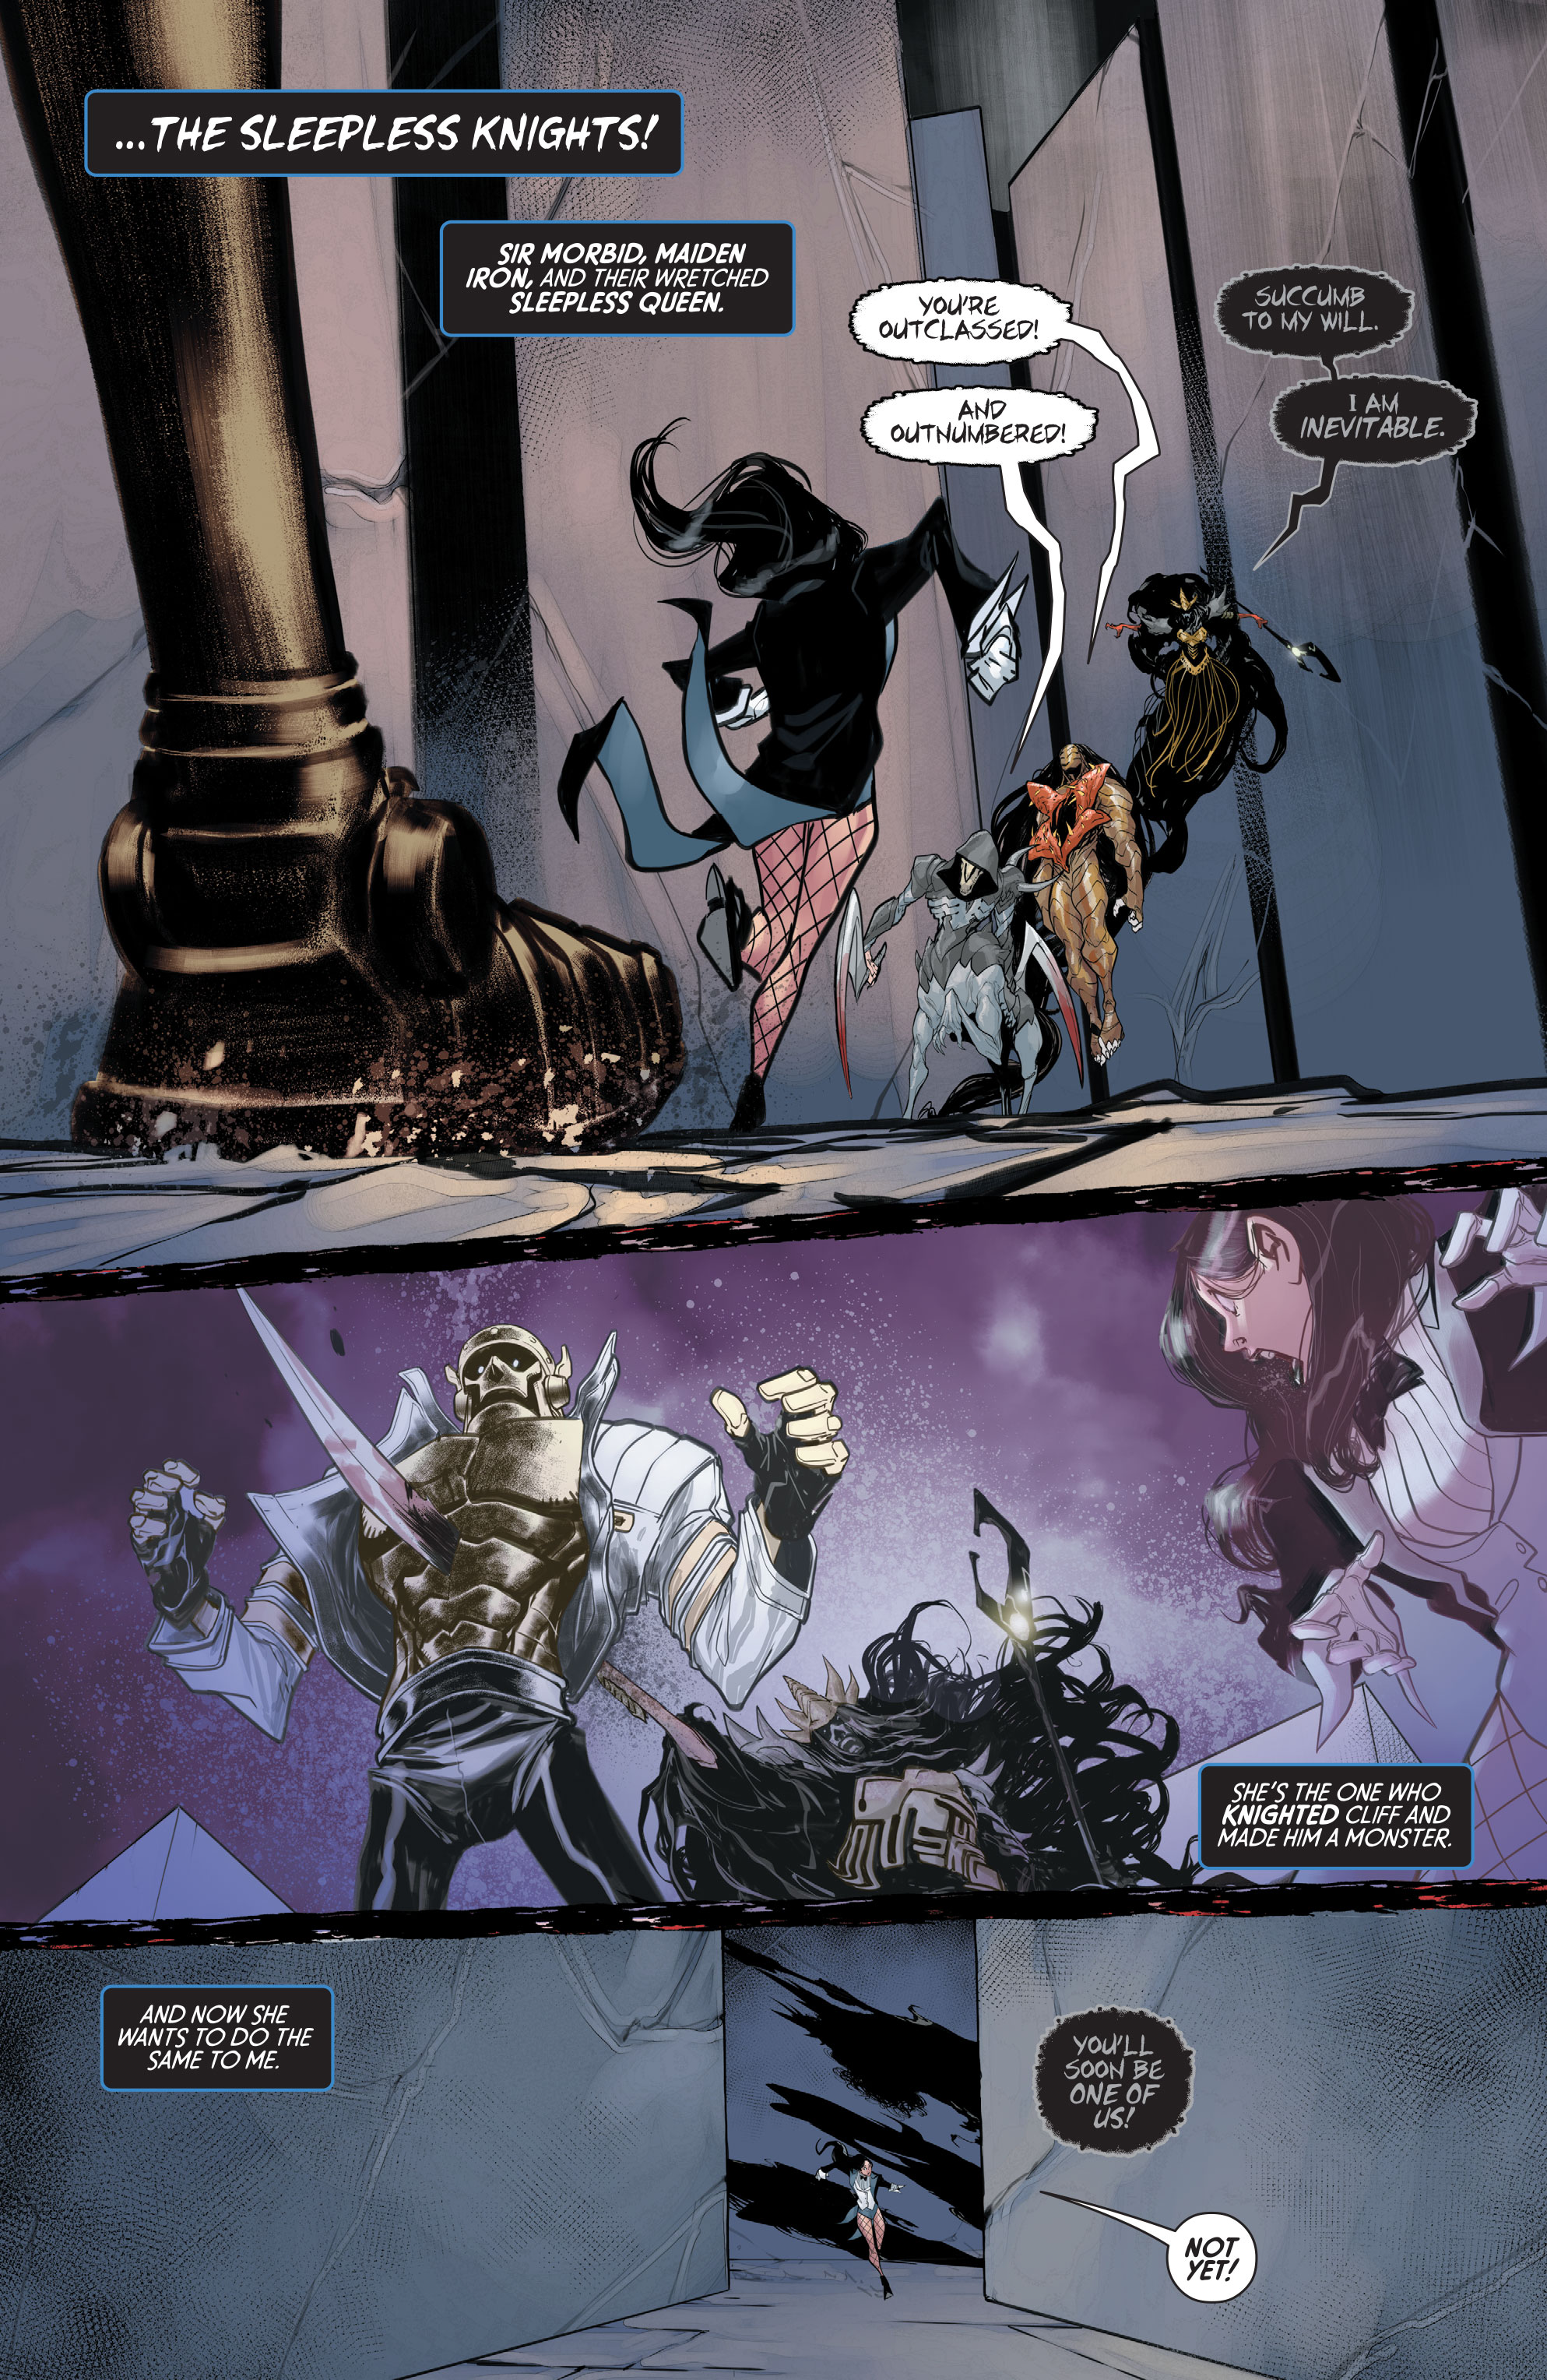 Obrázky z Knight Terrors: Zatanna #2.